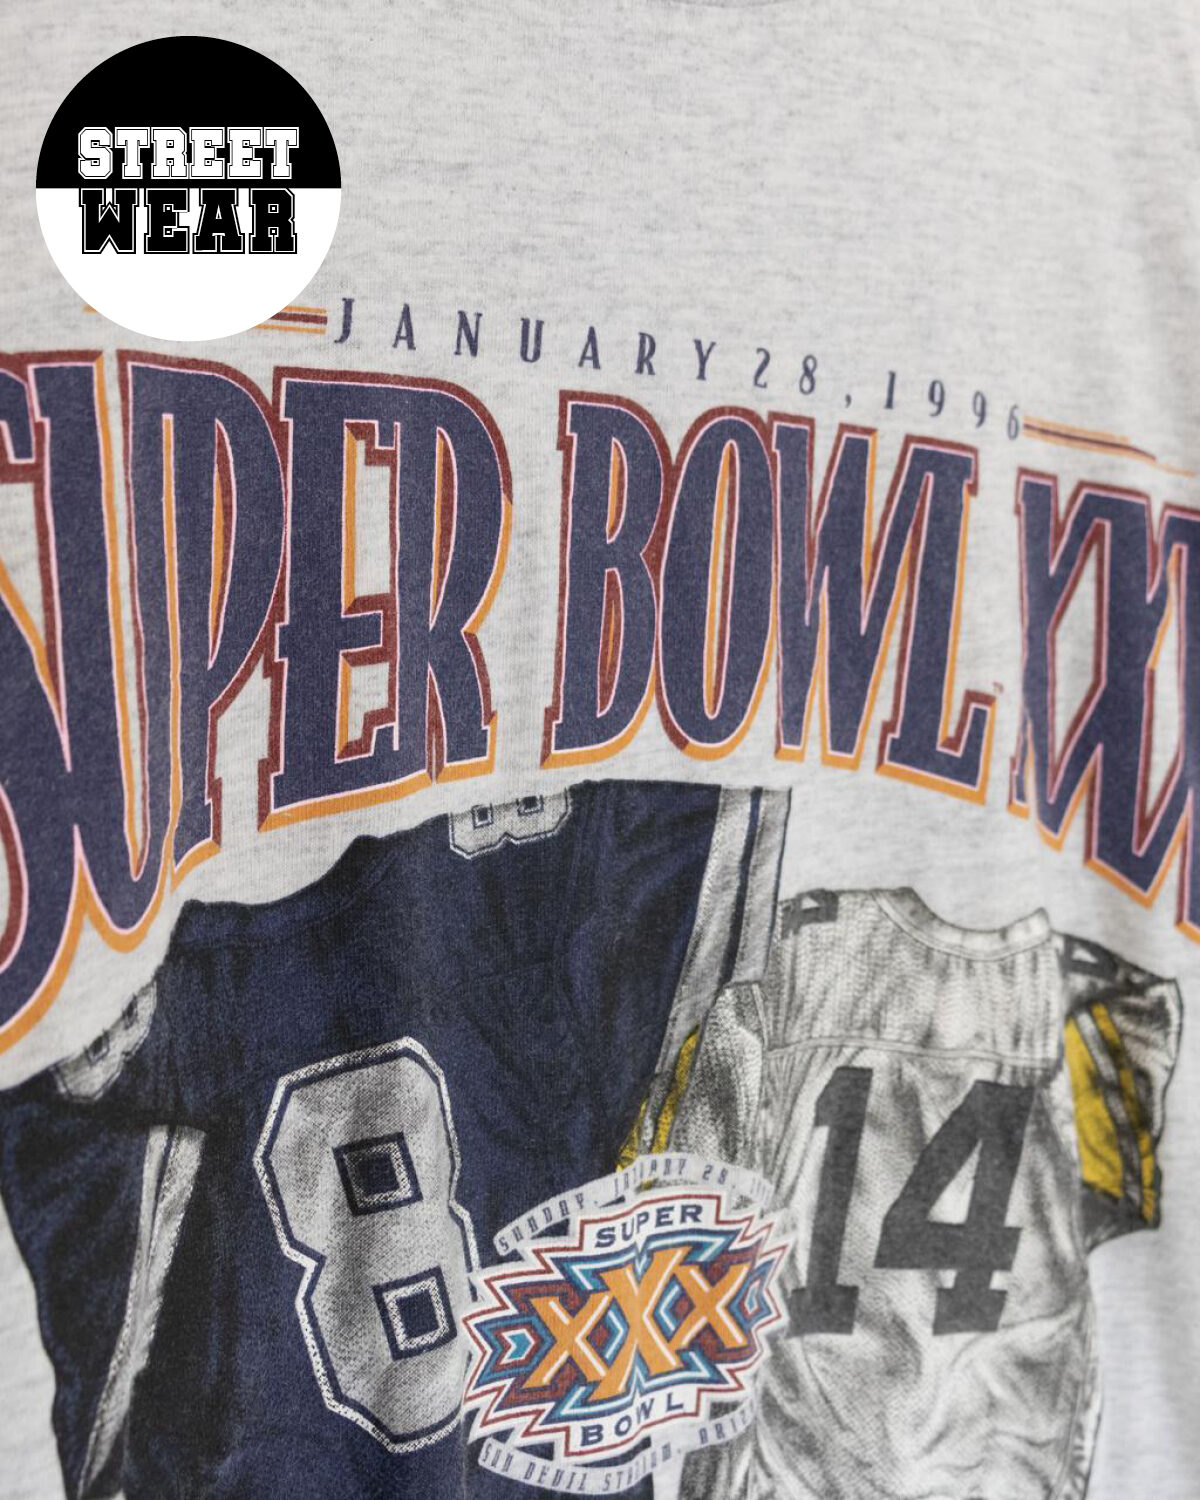 Nutmeg - 1996 Super Bowl t-shirt